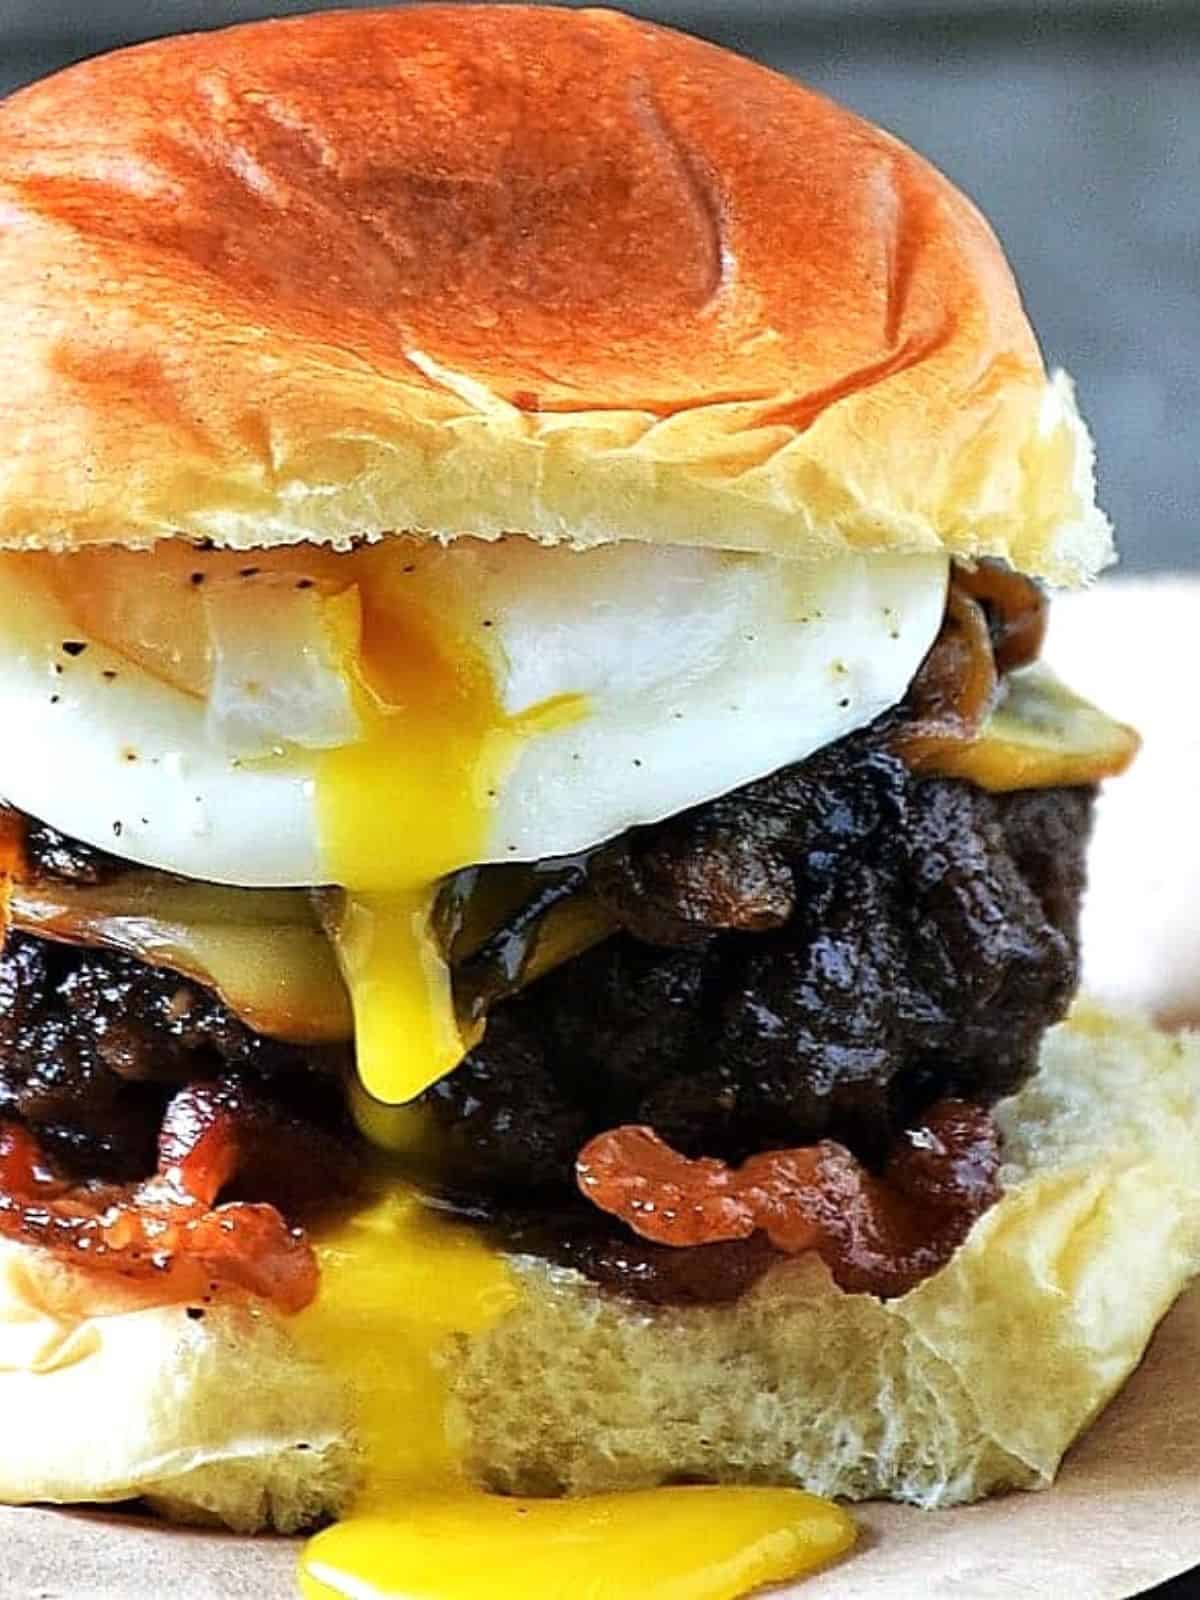 Egg burger up close